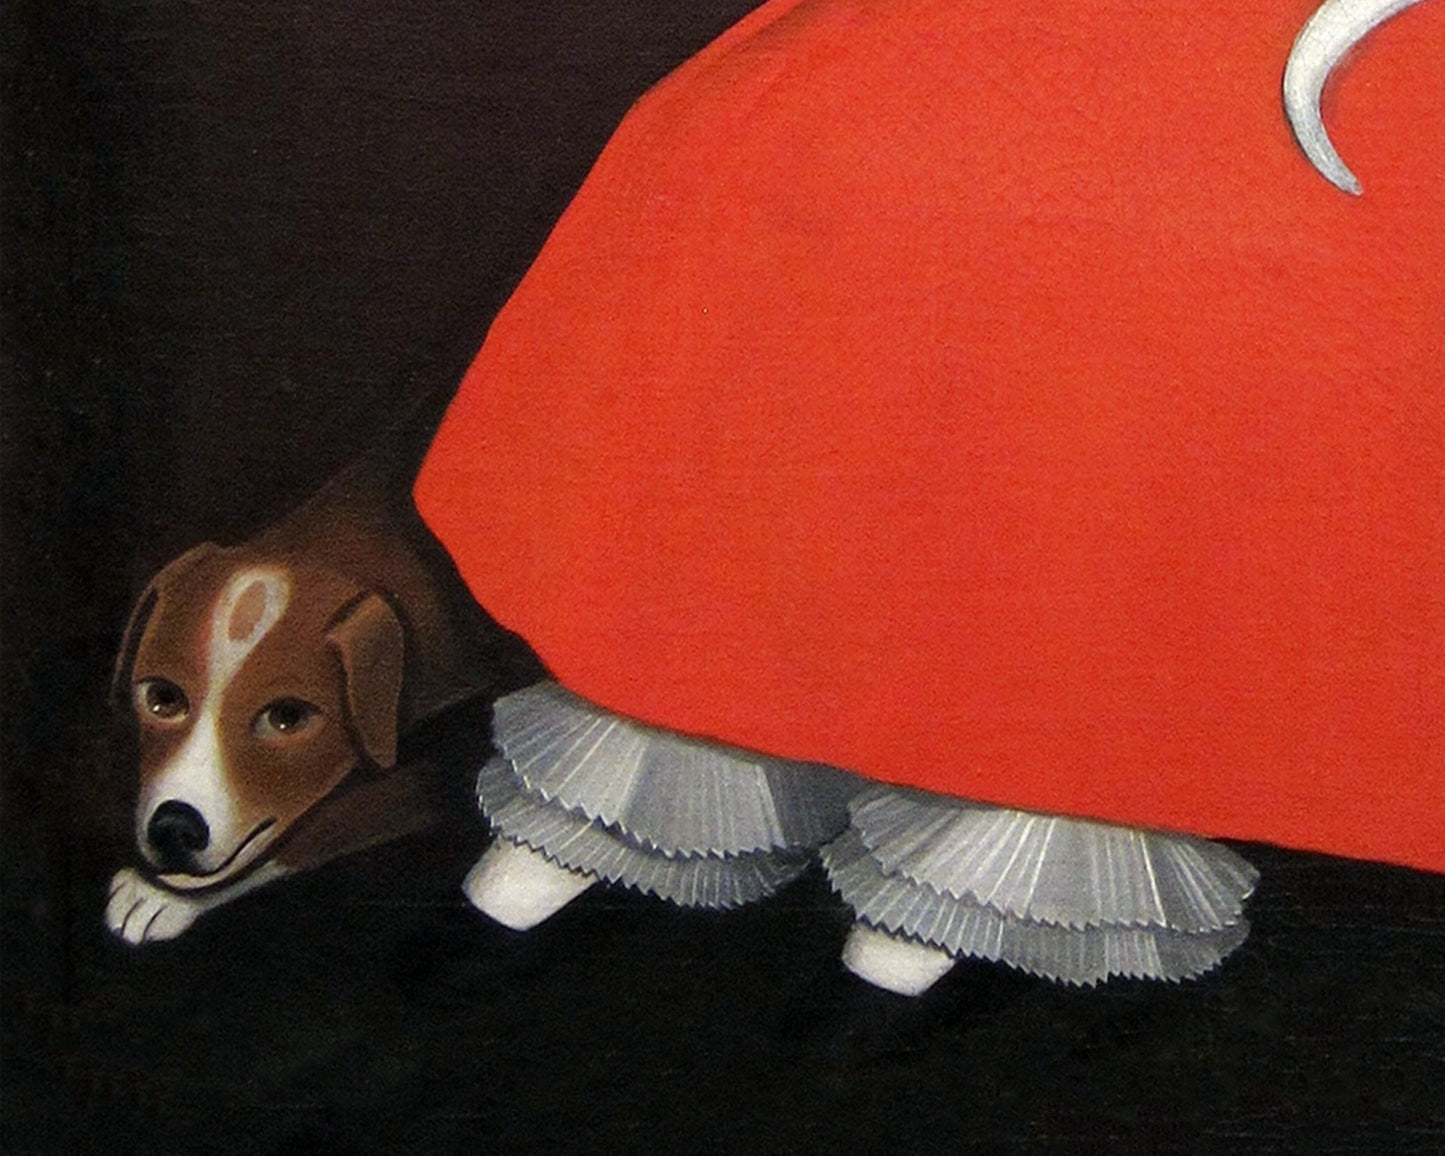 American folk art portrait | Vintage girl in red dress art print | Dog & white cat painting | Americana wall art | Modern vintage décor